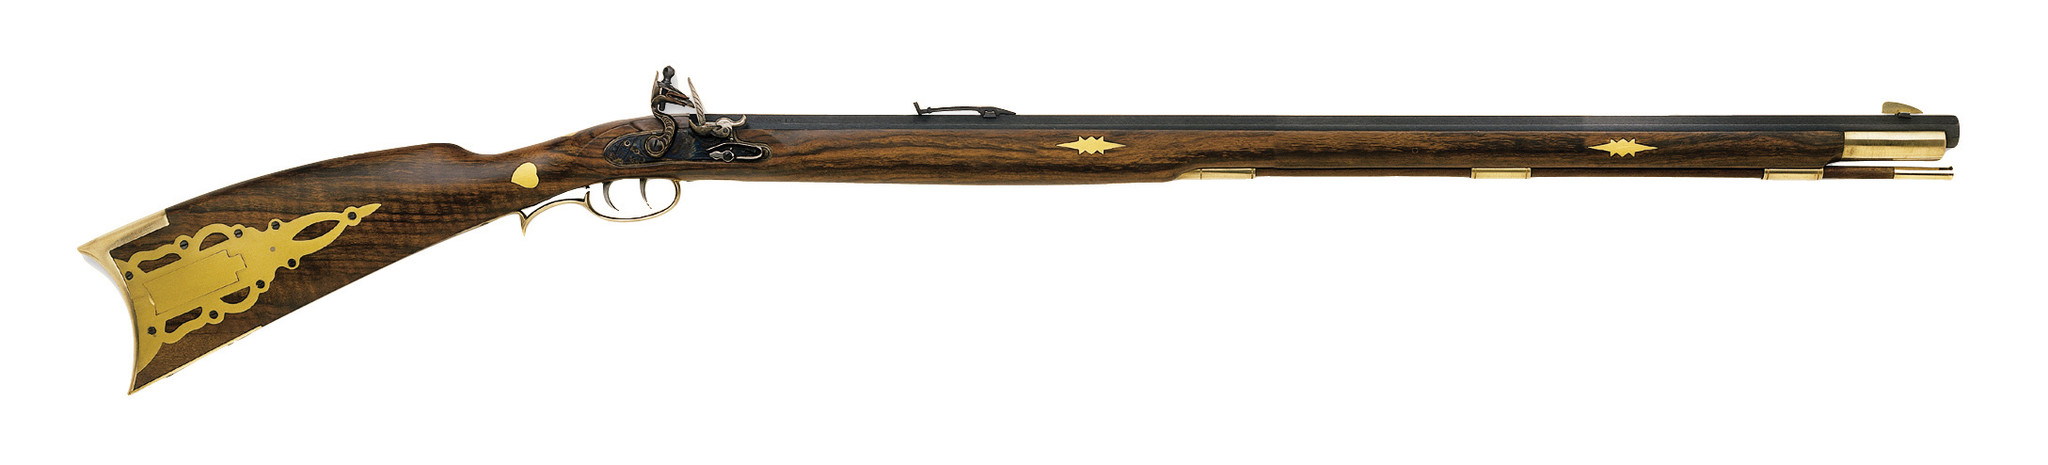 Traditions Traditions Pennsylvania Rifle Flintlock .50 caliber with 33.5" Barrel